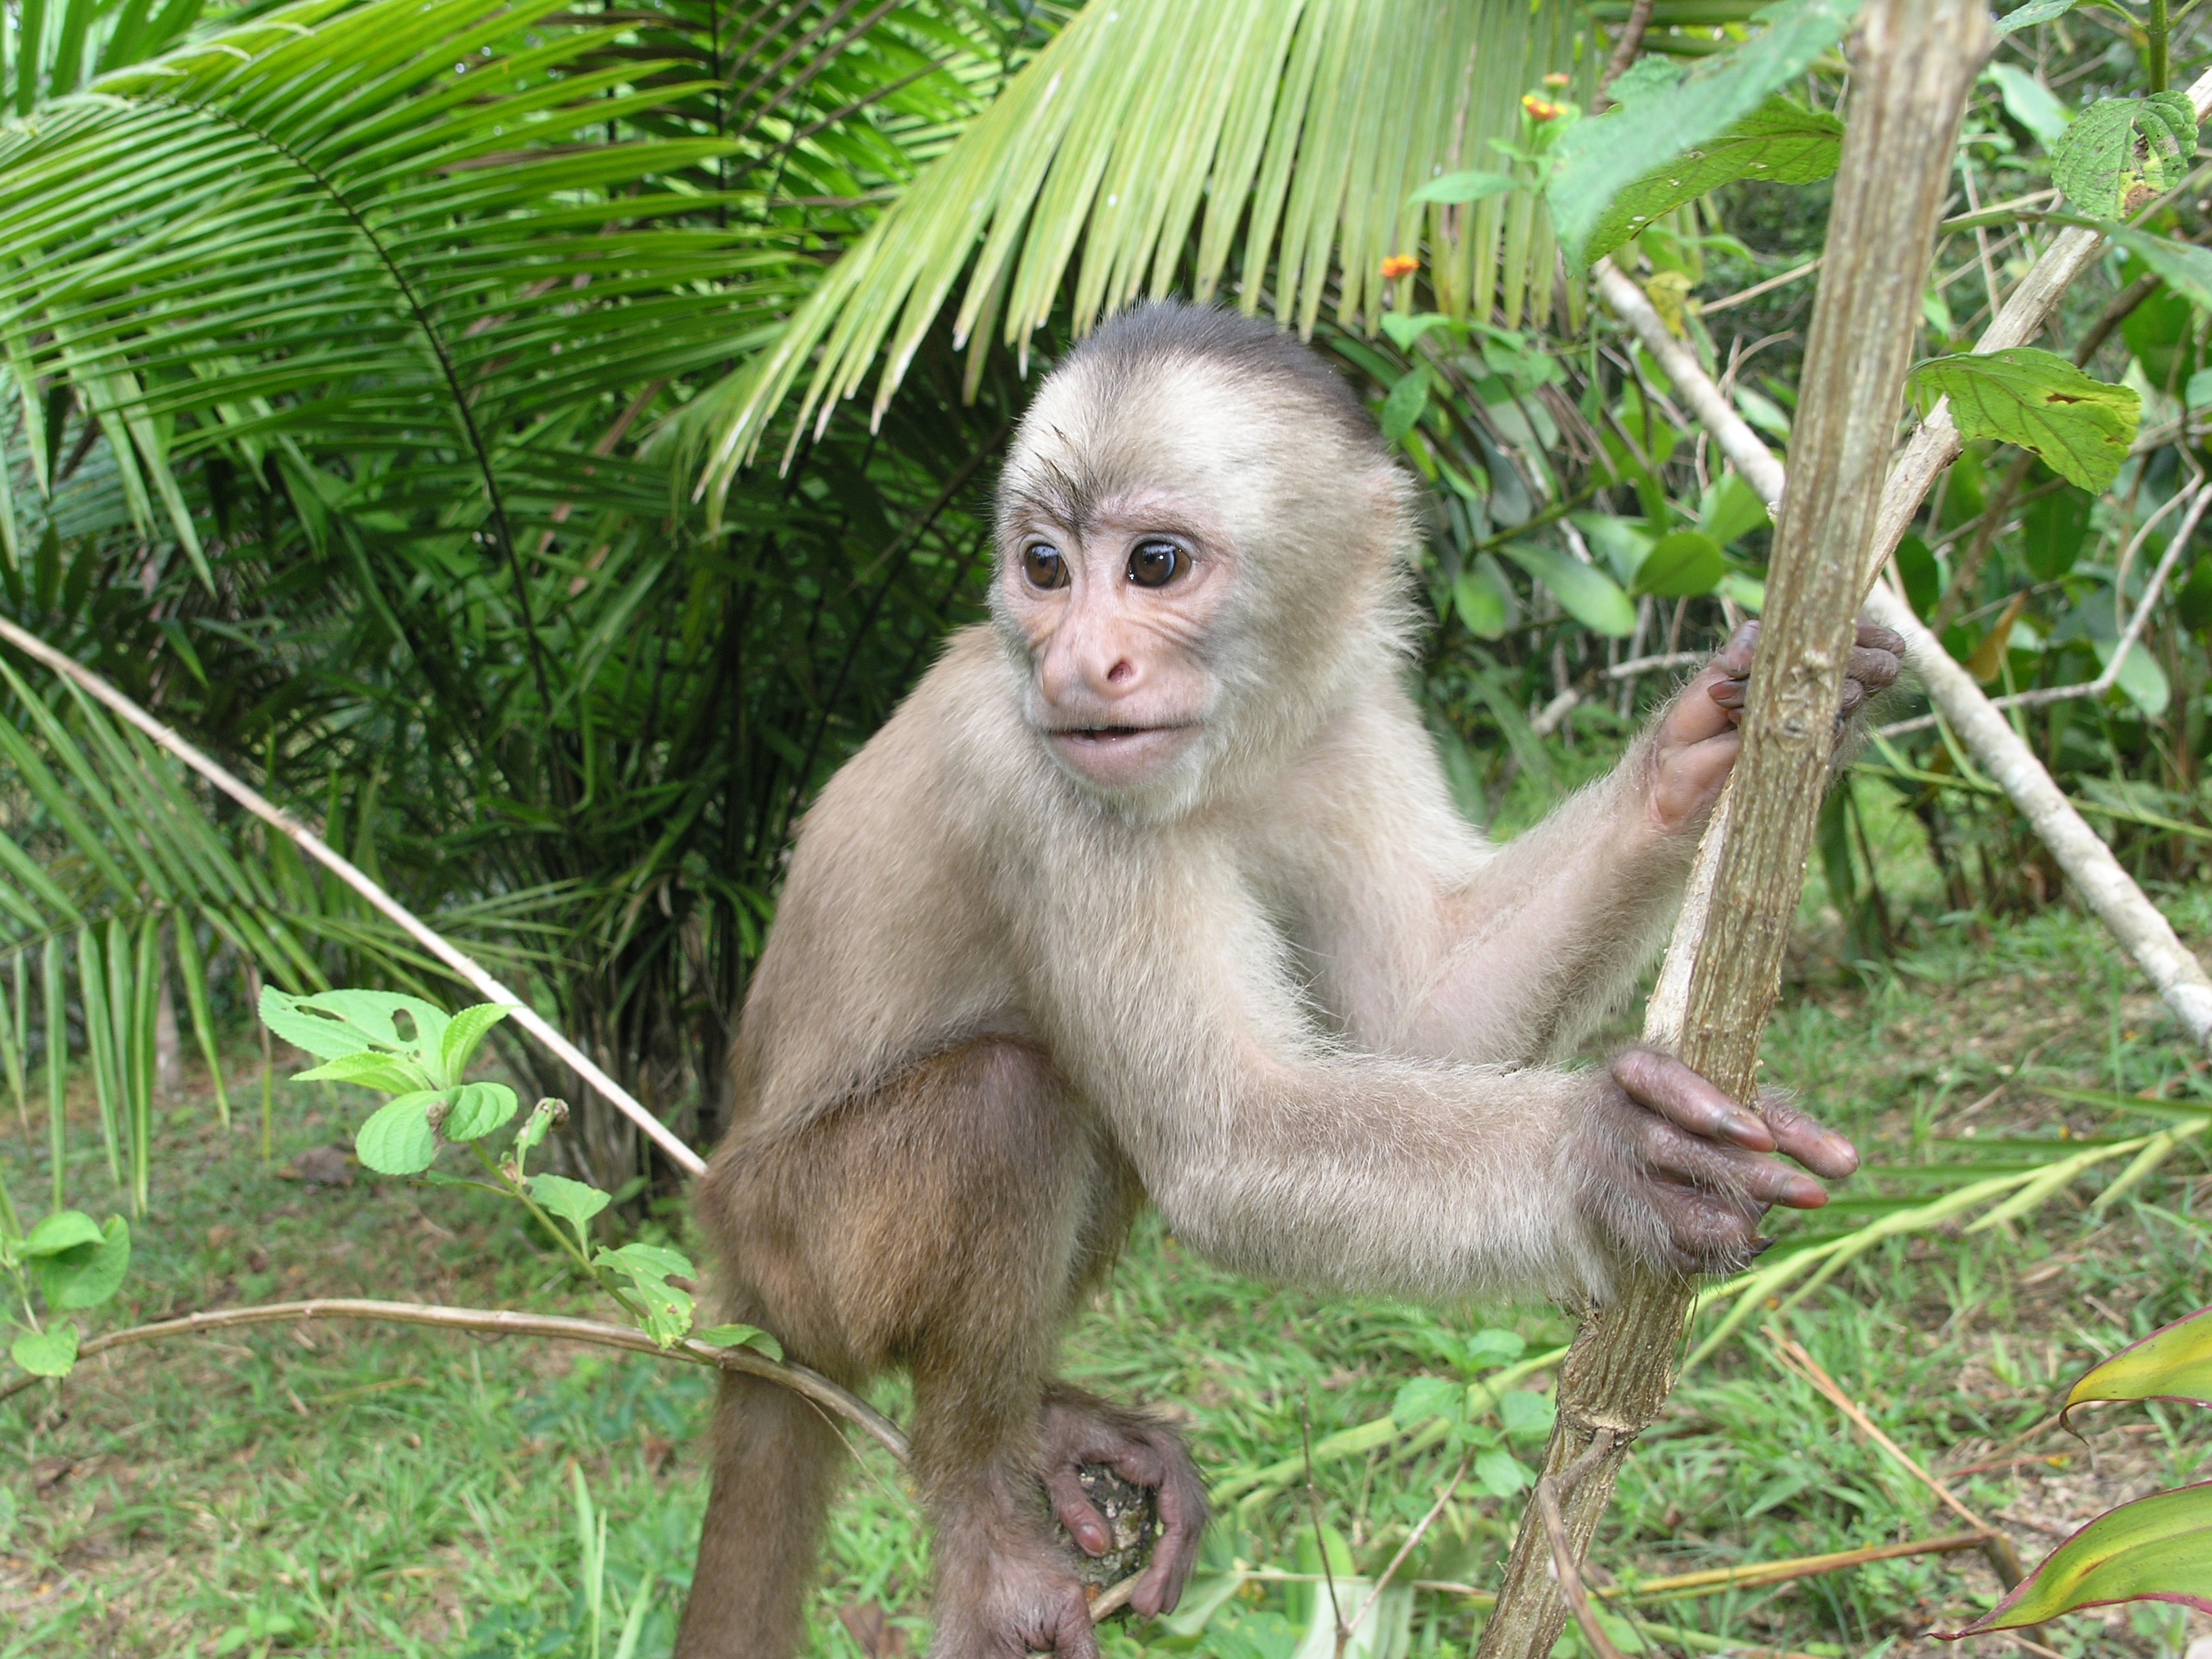 Monkey on the branch photo